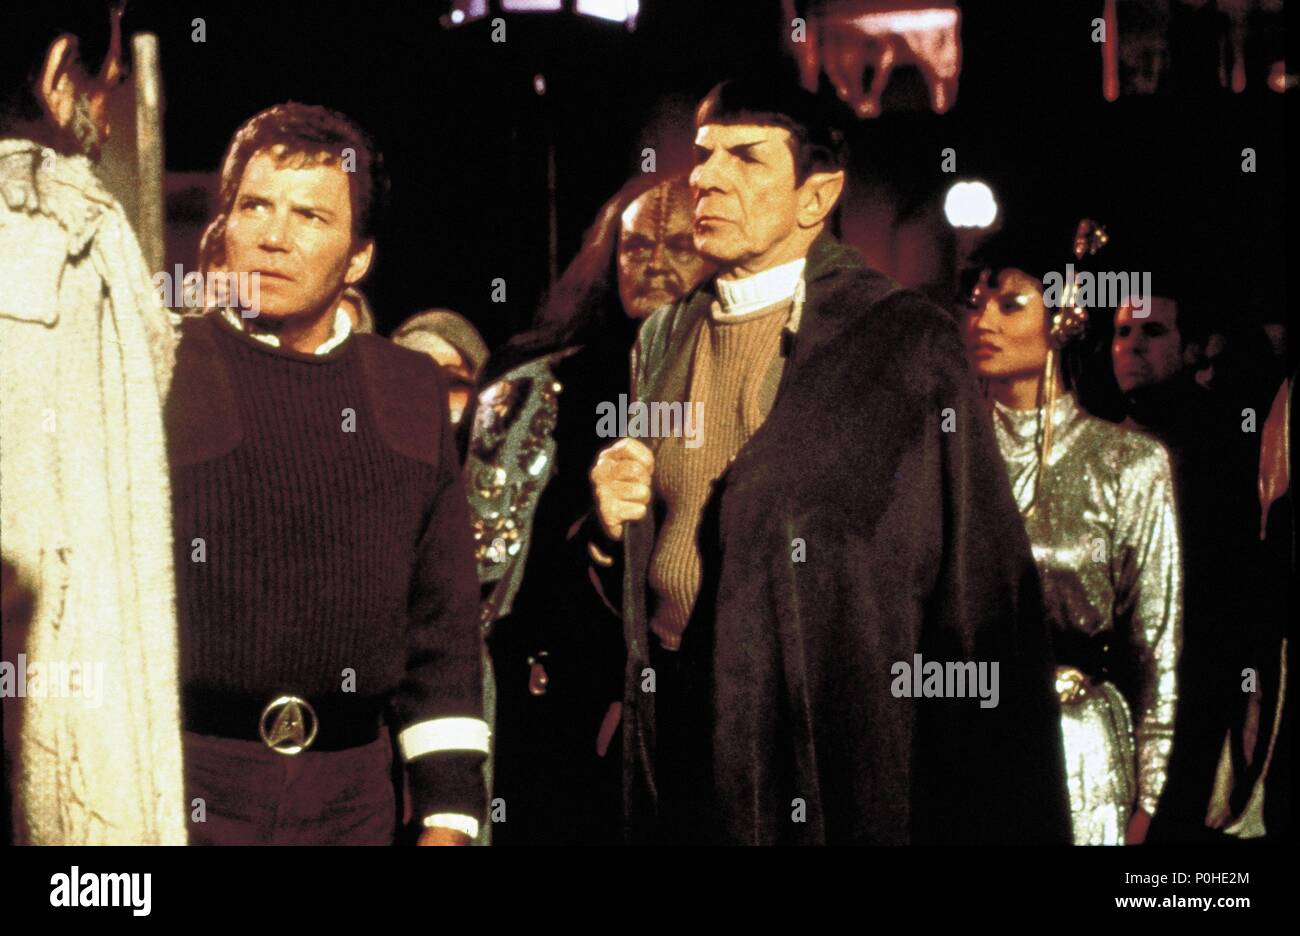 Original Film Titel: Star Trek V: The Final Frontier. Englischer Titel: Star Trek V: The Final Frontier. Regisseur: William Shatner. Jahr: 1989. Stars: Leonard Nimoy, William Shatner. Quelle: Paramount Pictures/Album Stockfoto